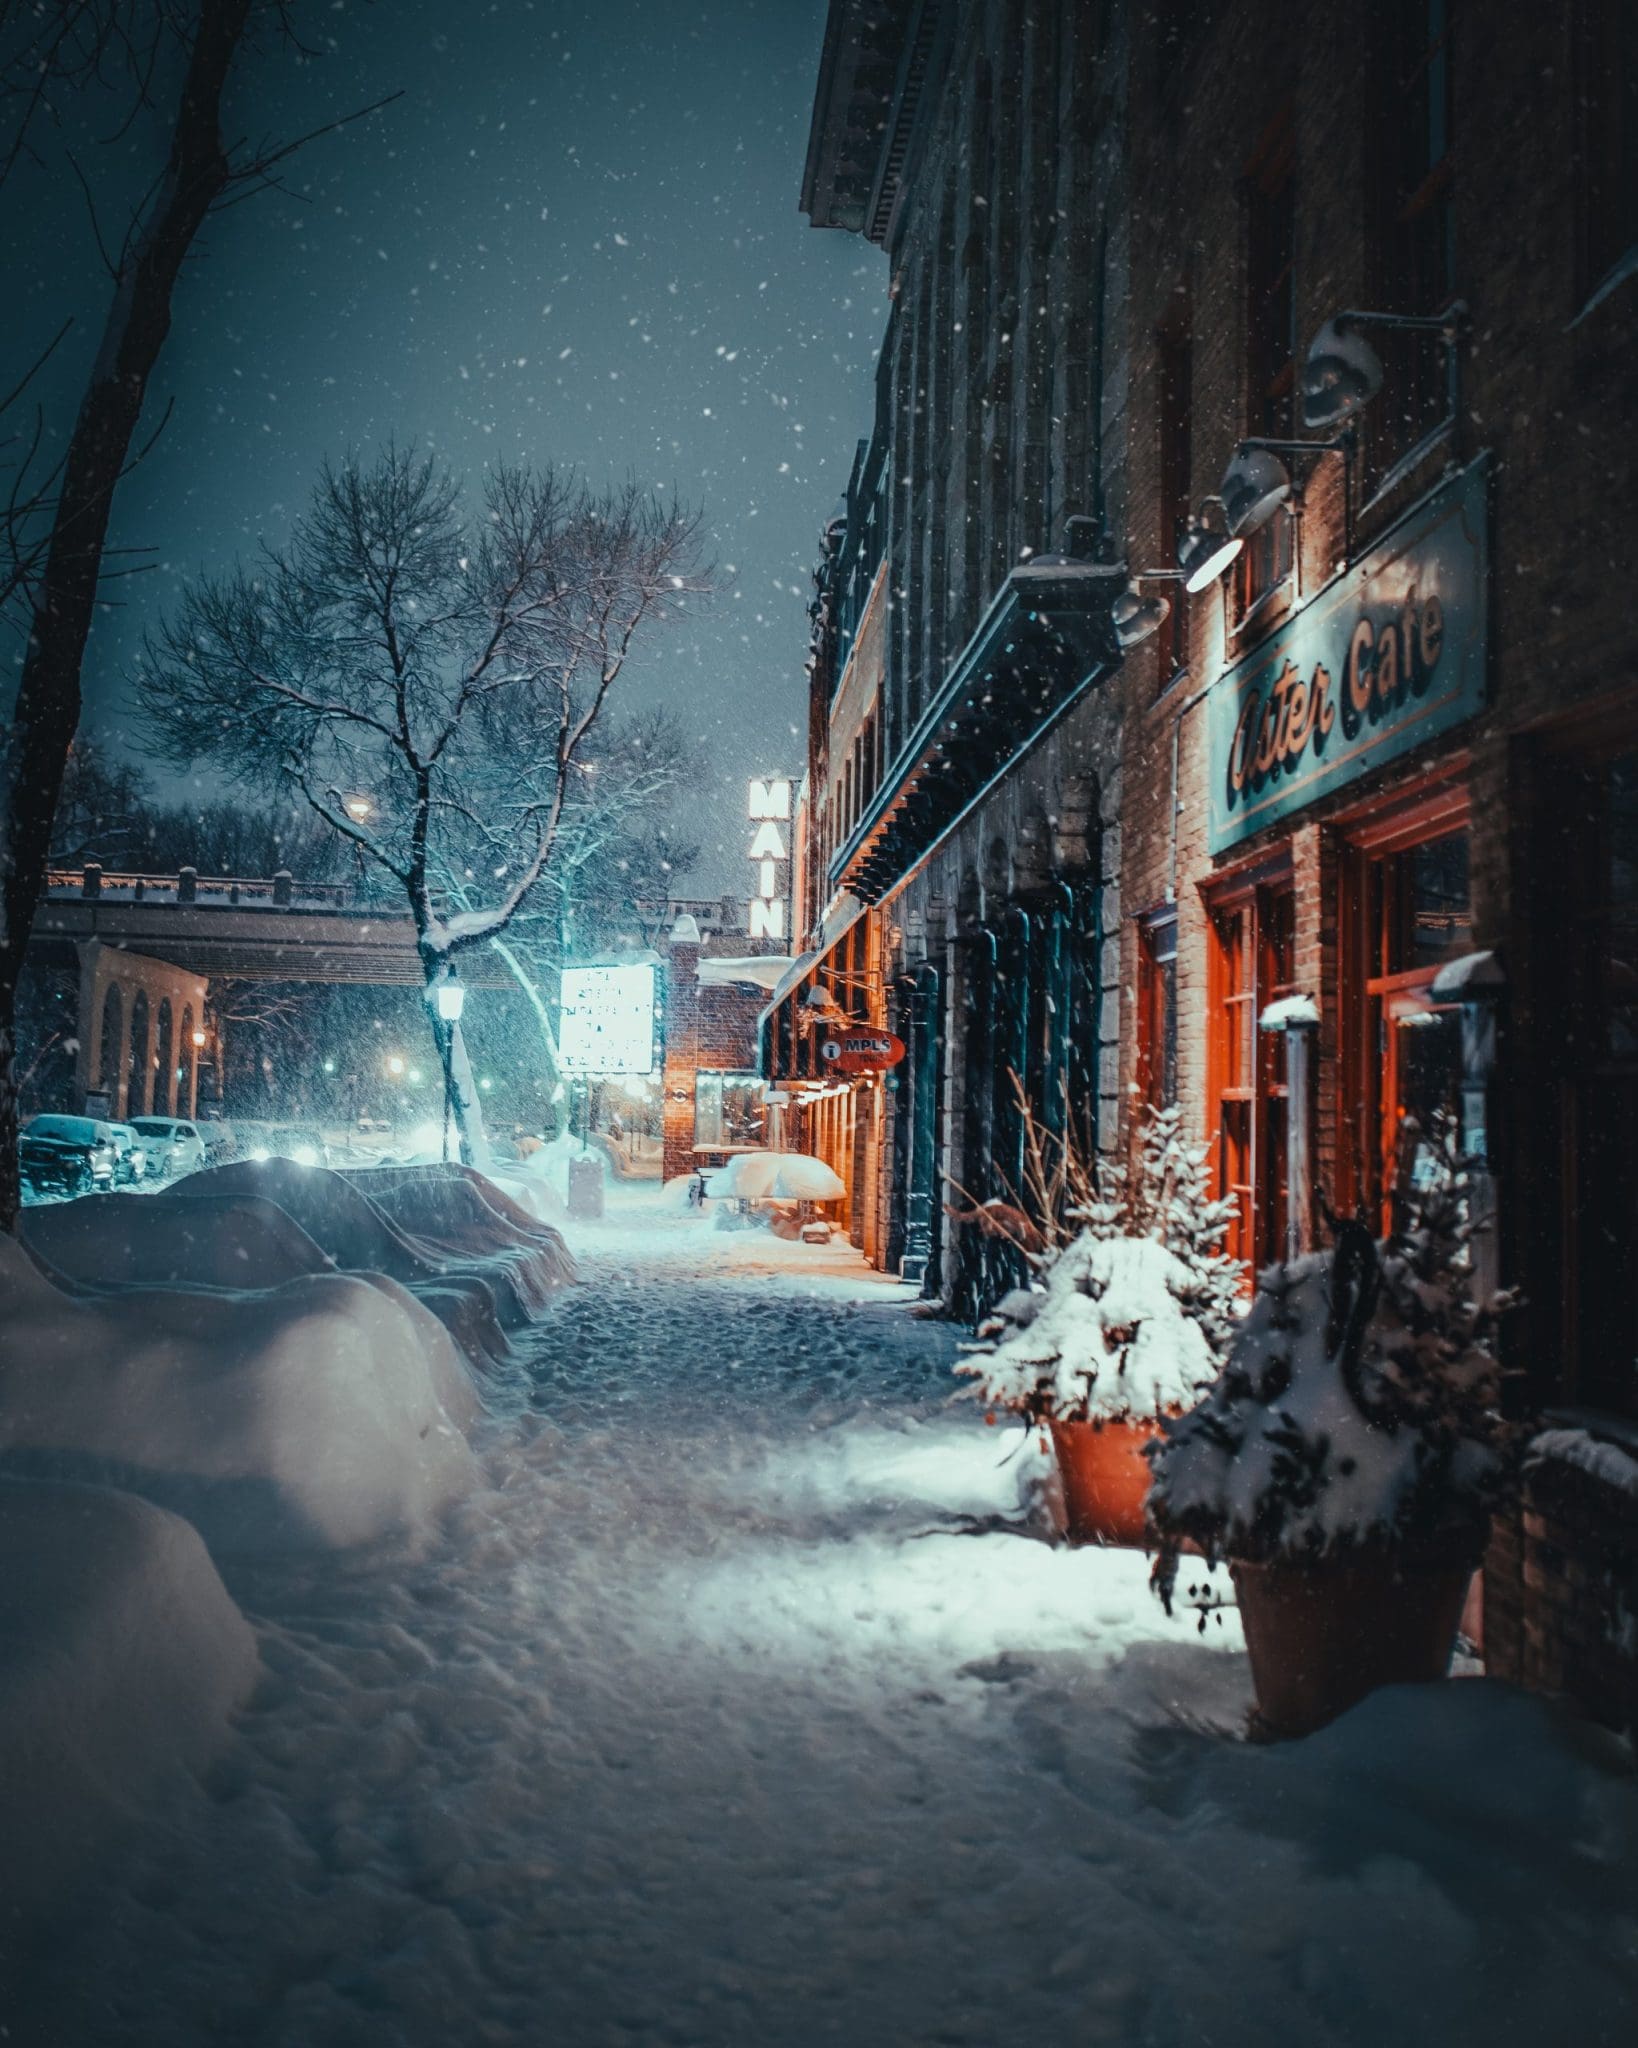 Snow street at Christmas